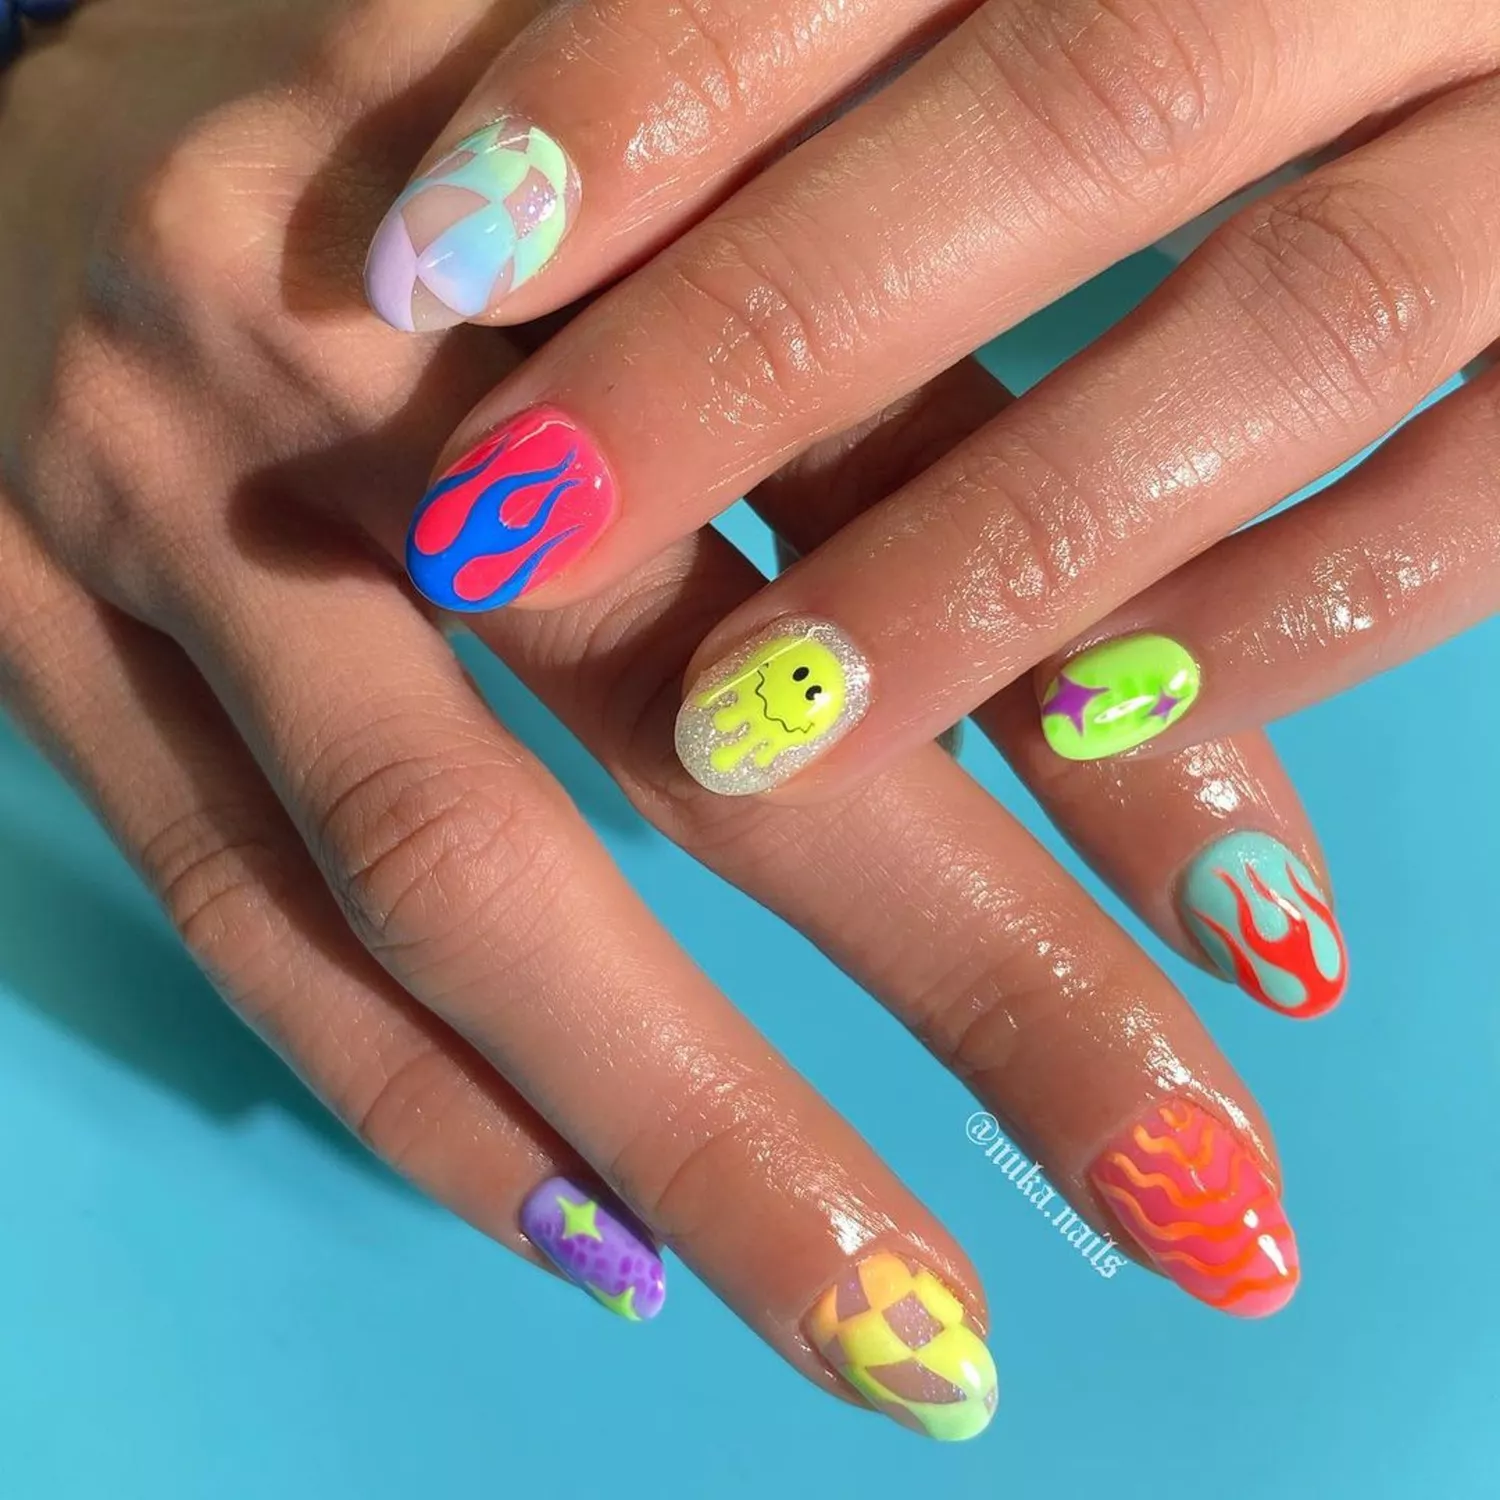 Neon mismatched summer nail art